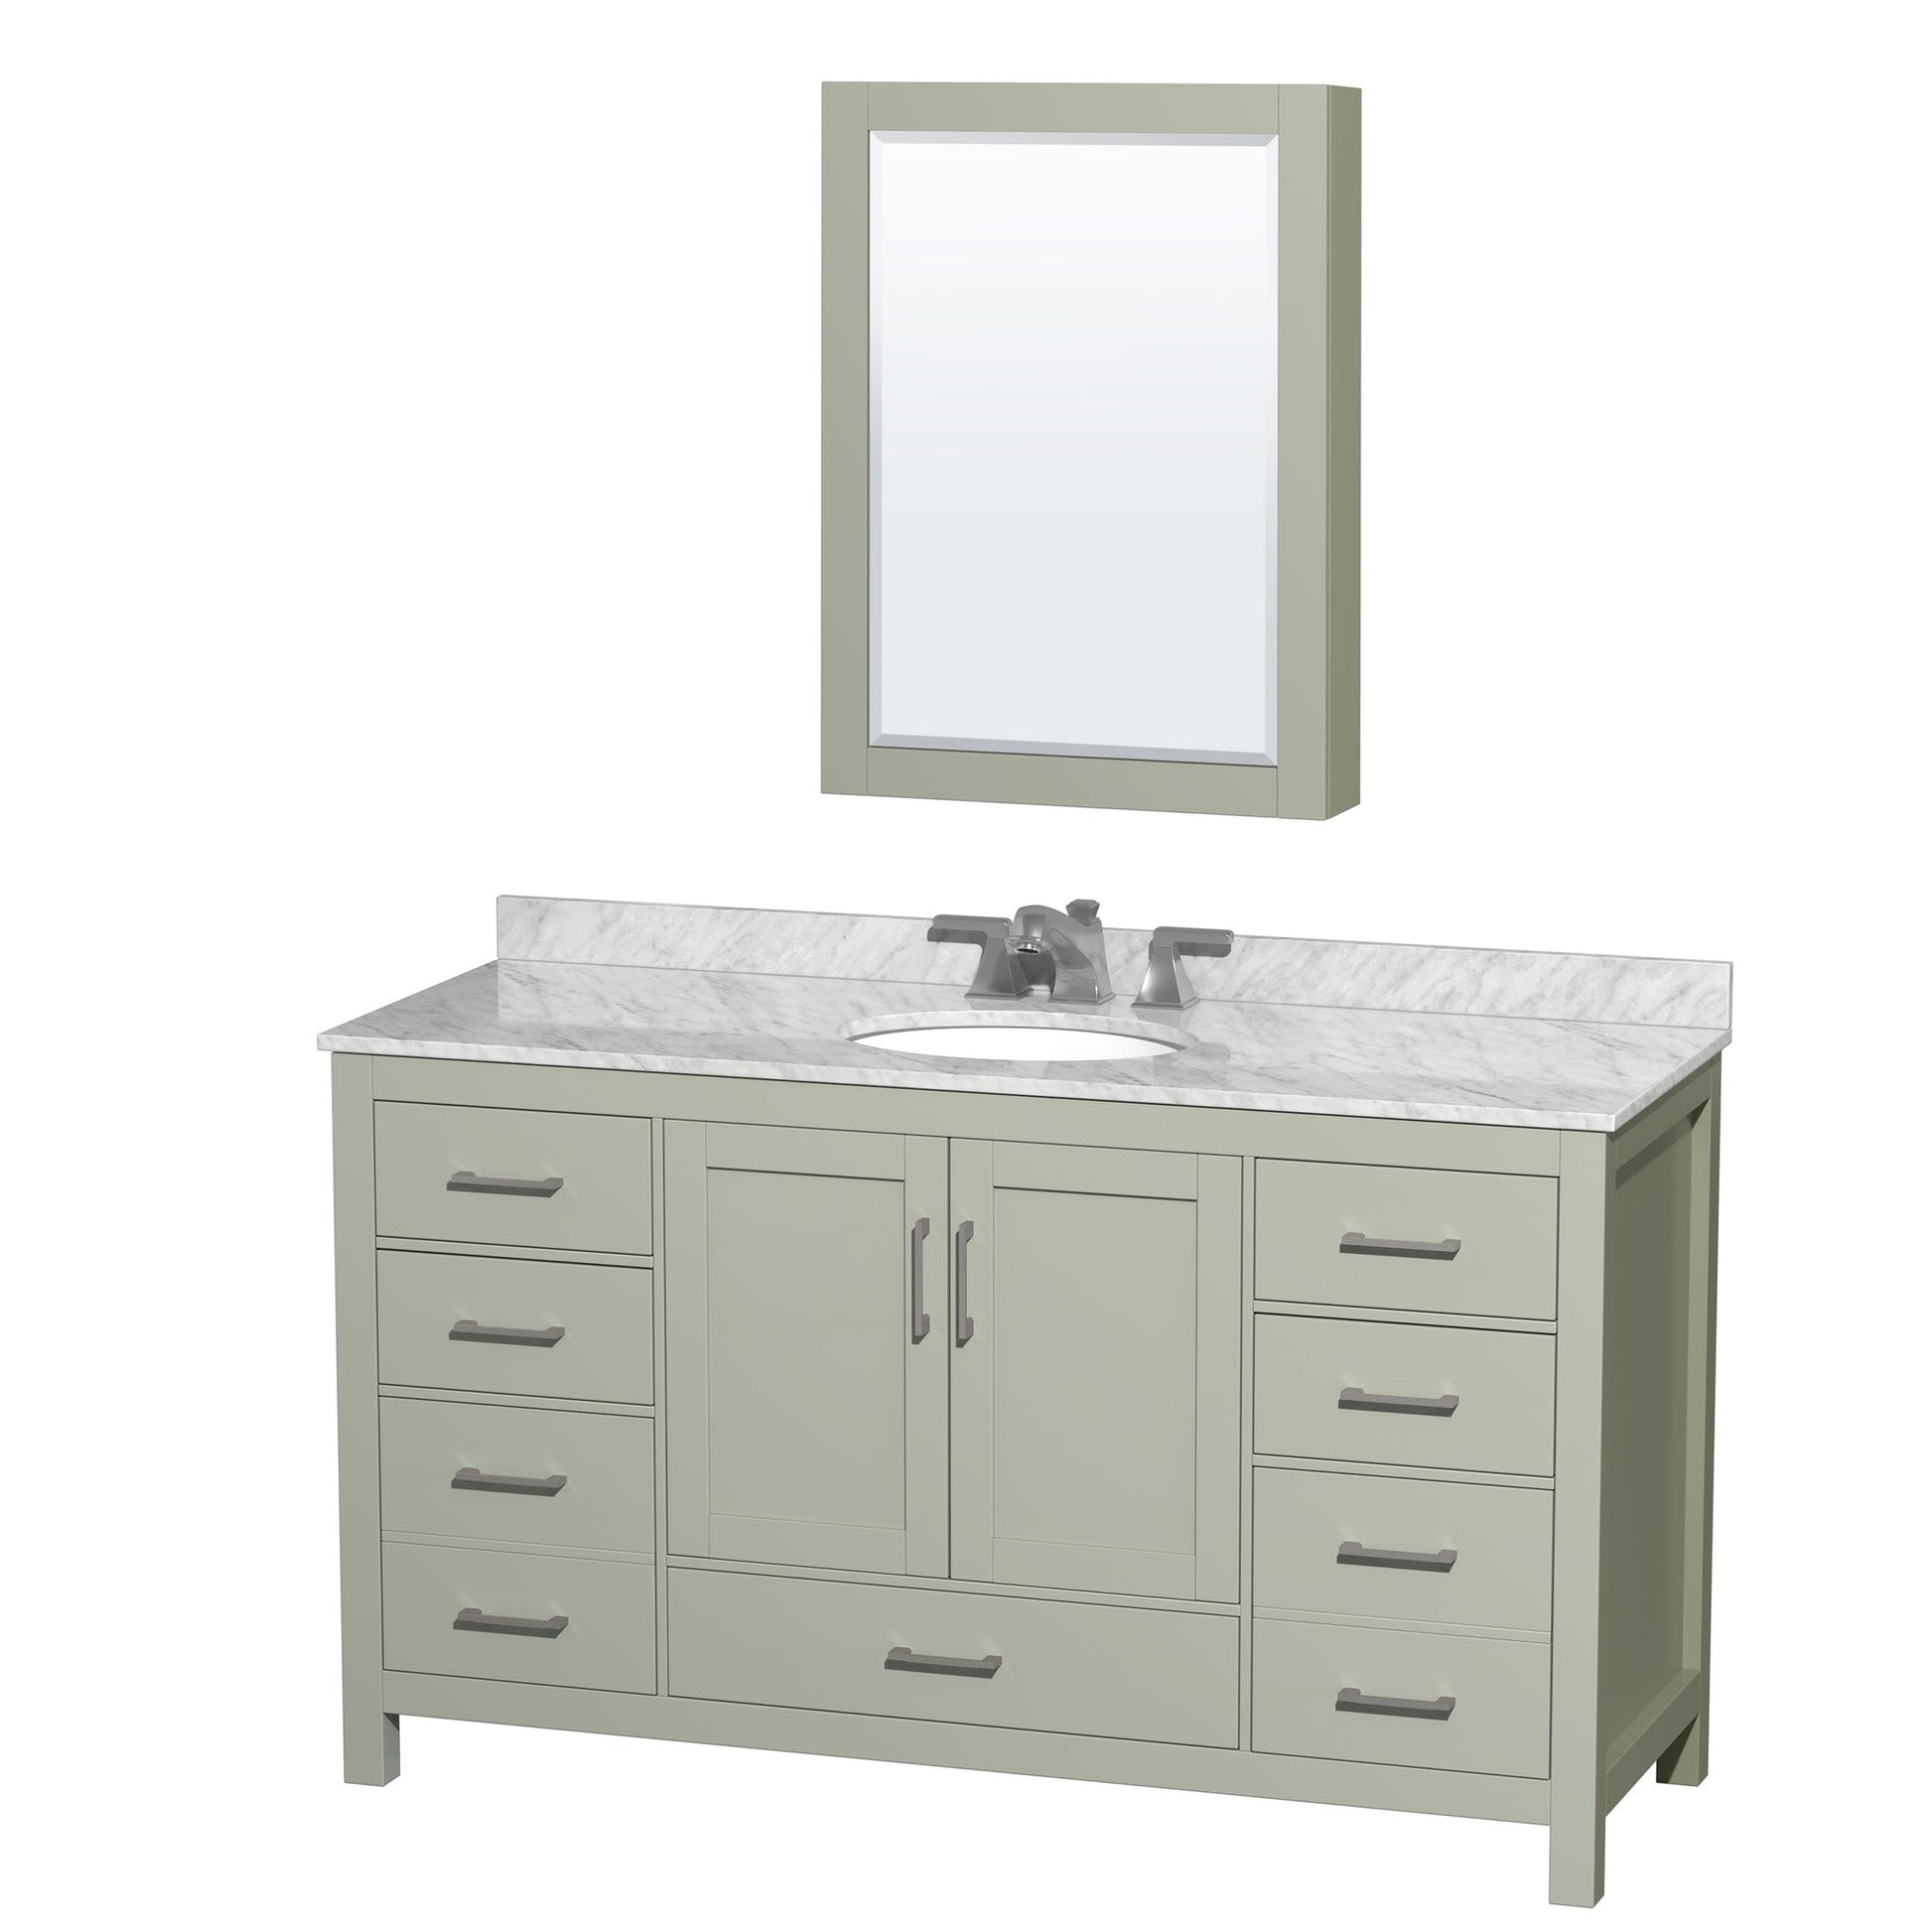 Sheffield 60" Single Bathroom Vanity in Light Green, White Carrara Marble Countertop, Undermount Oval Sink, Brushed Nickel Trim, Medicine Cabinet